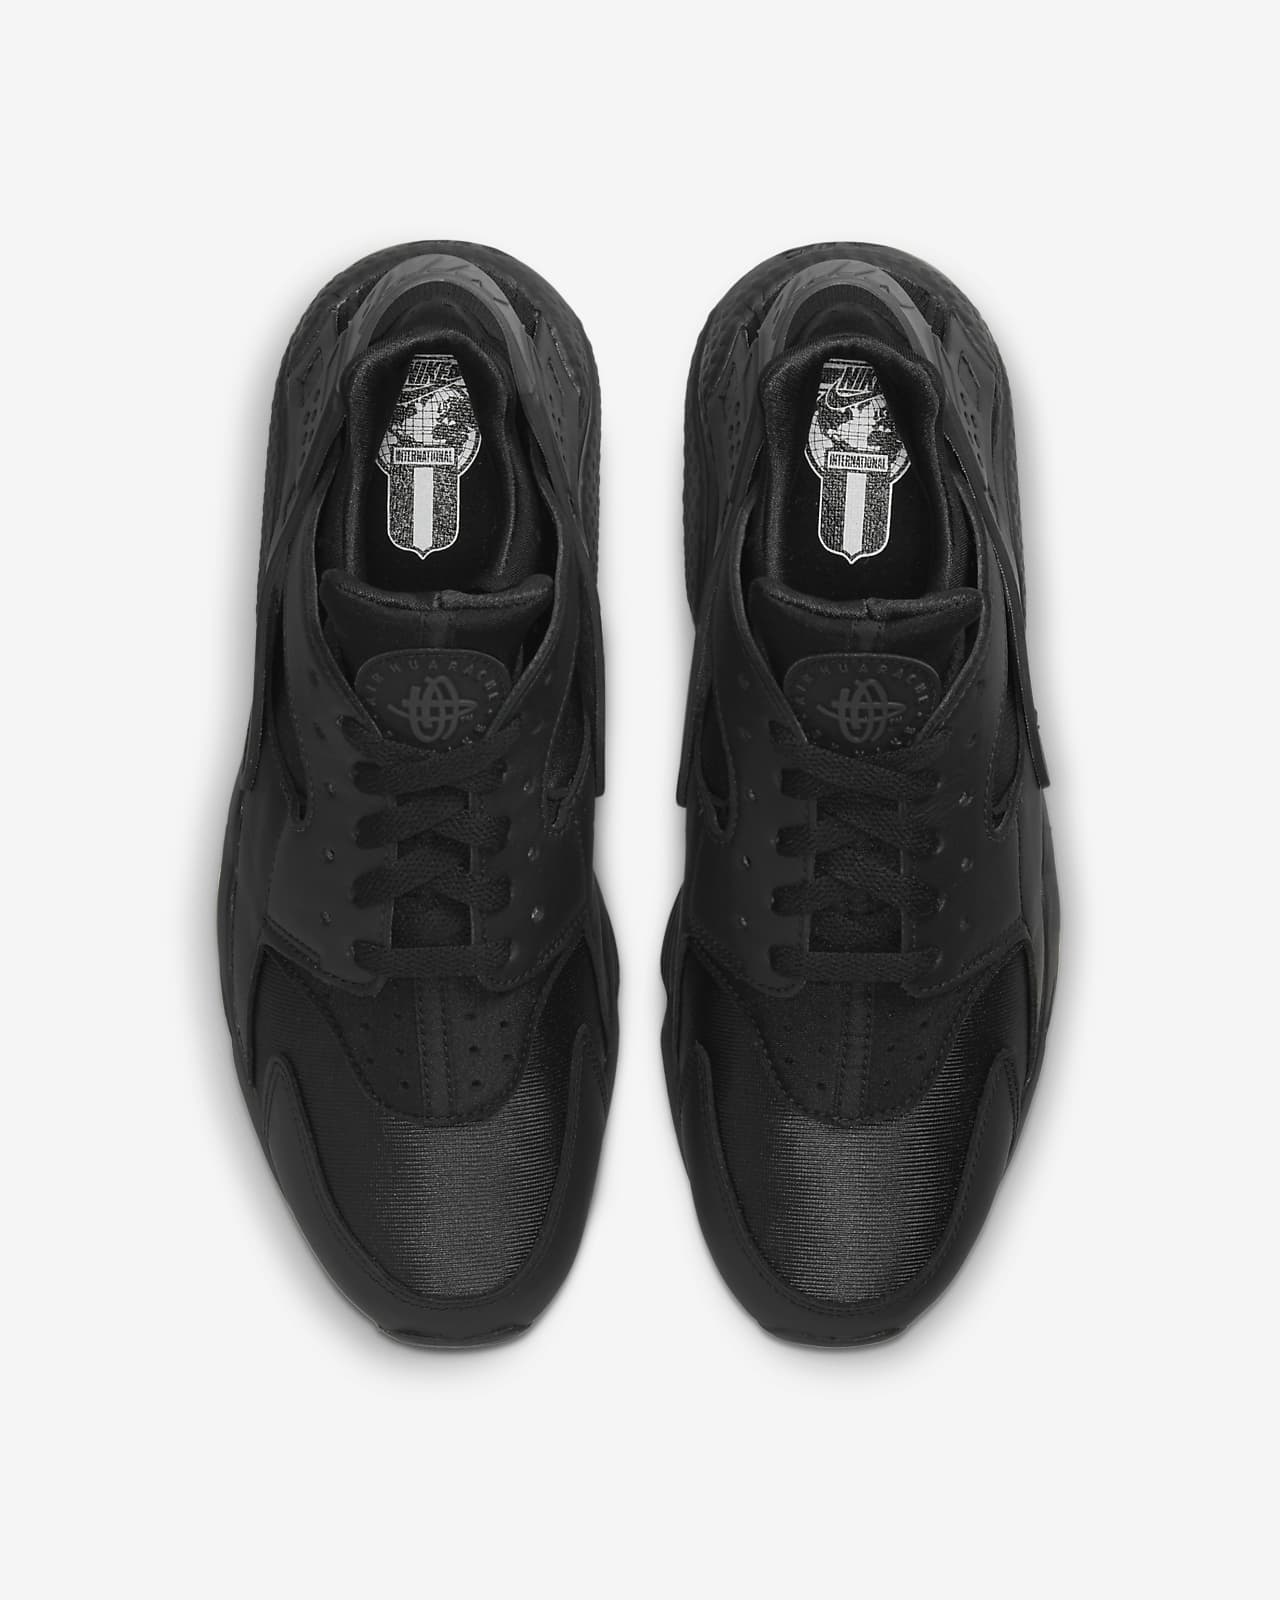 huaraches shoes nike all black